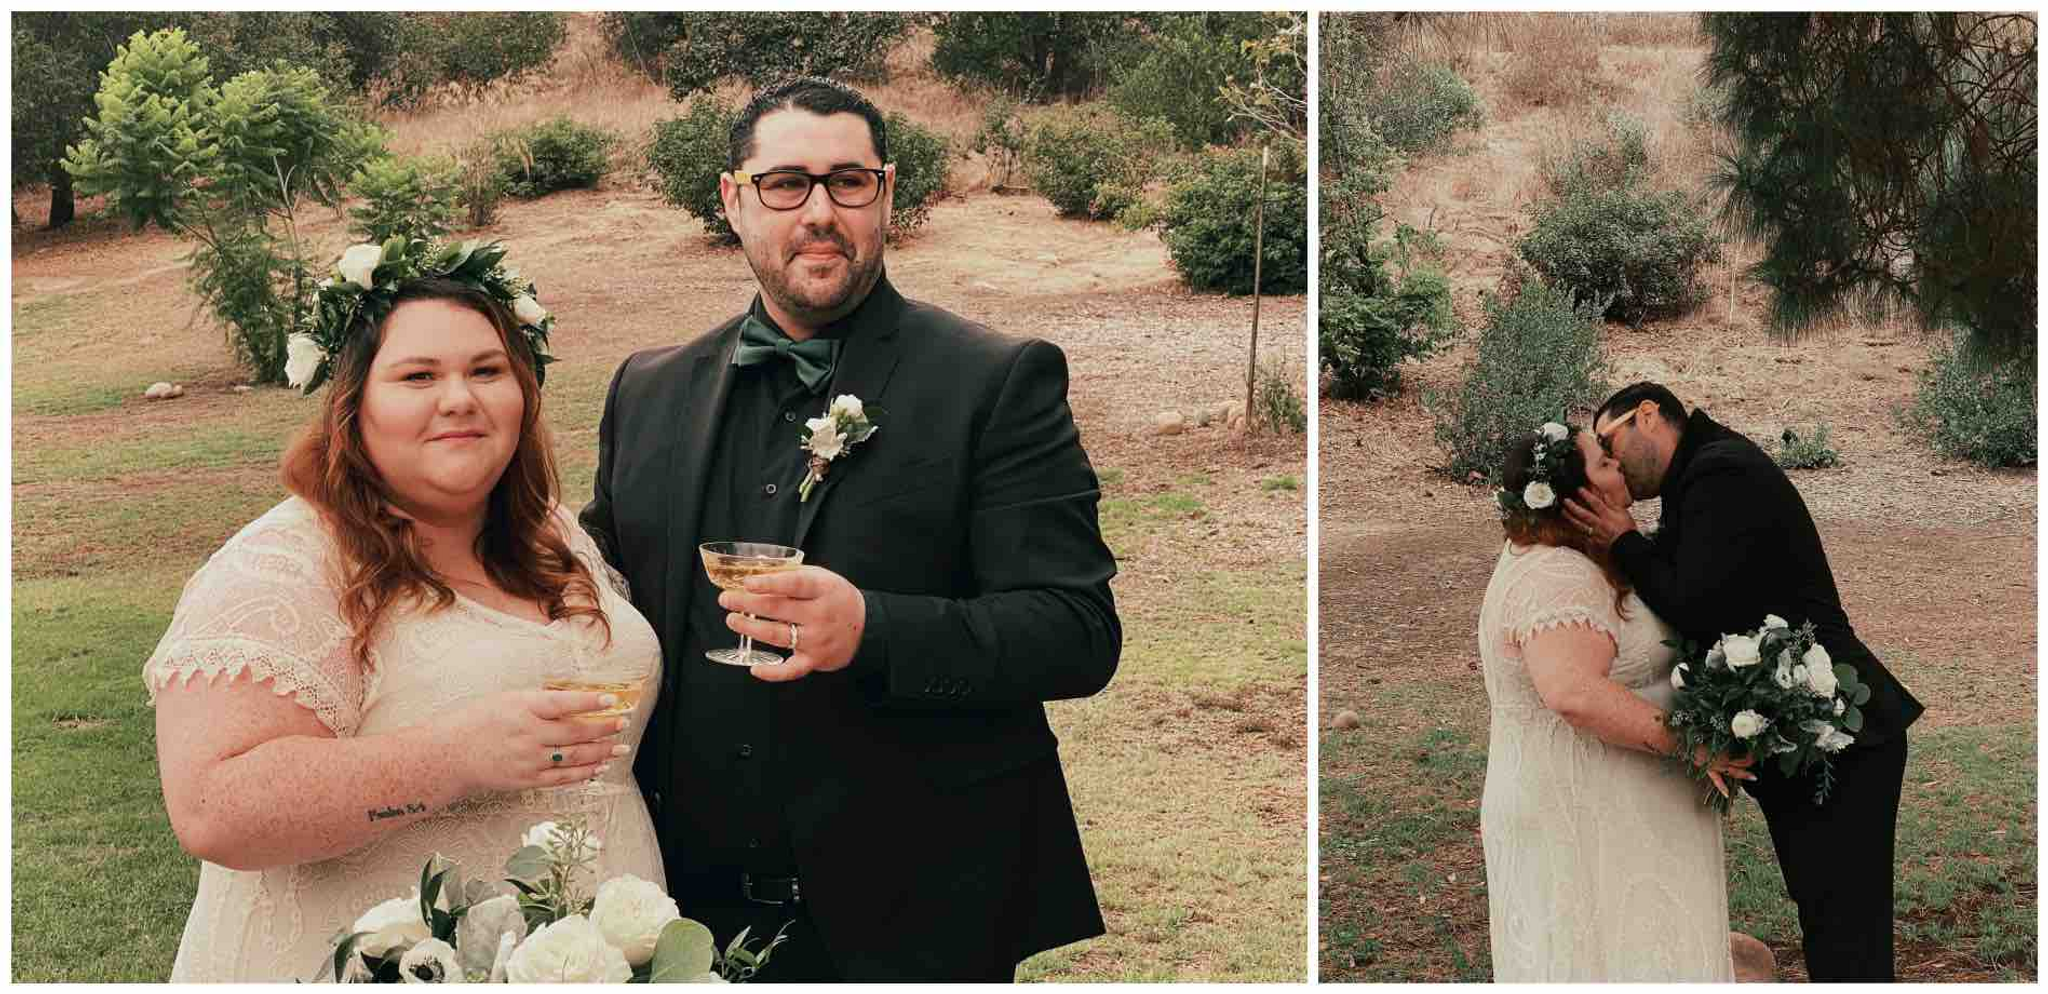 WooPlus Love | “Just Married!” – Samantha & Daniel